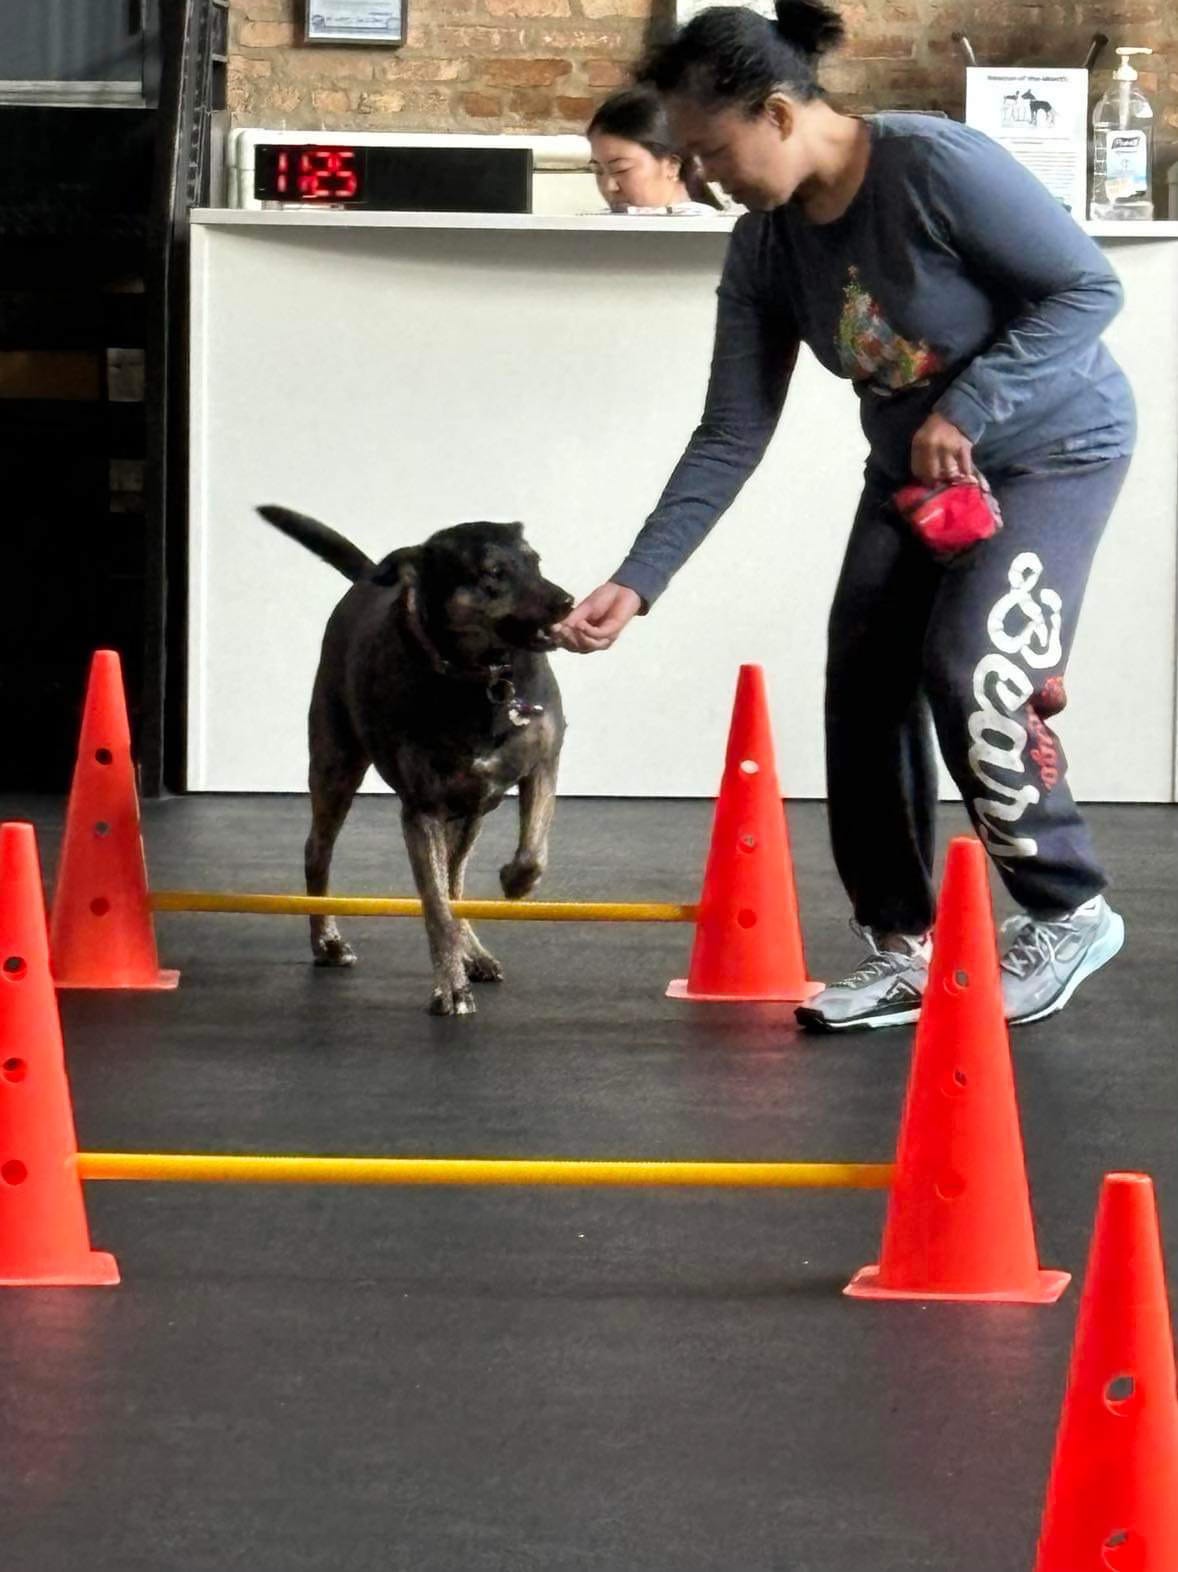 Author leading her dog, Maeve, through agility hurdles using treats.